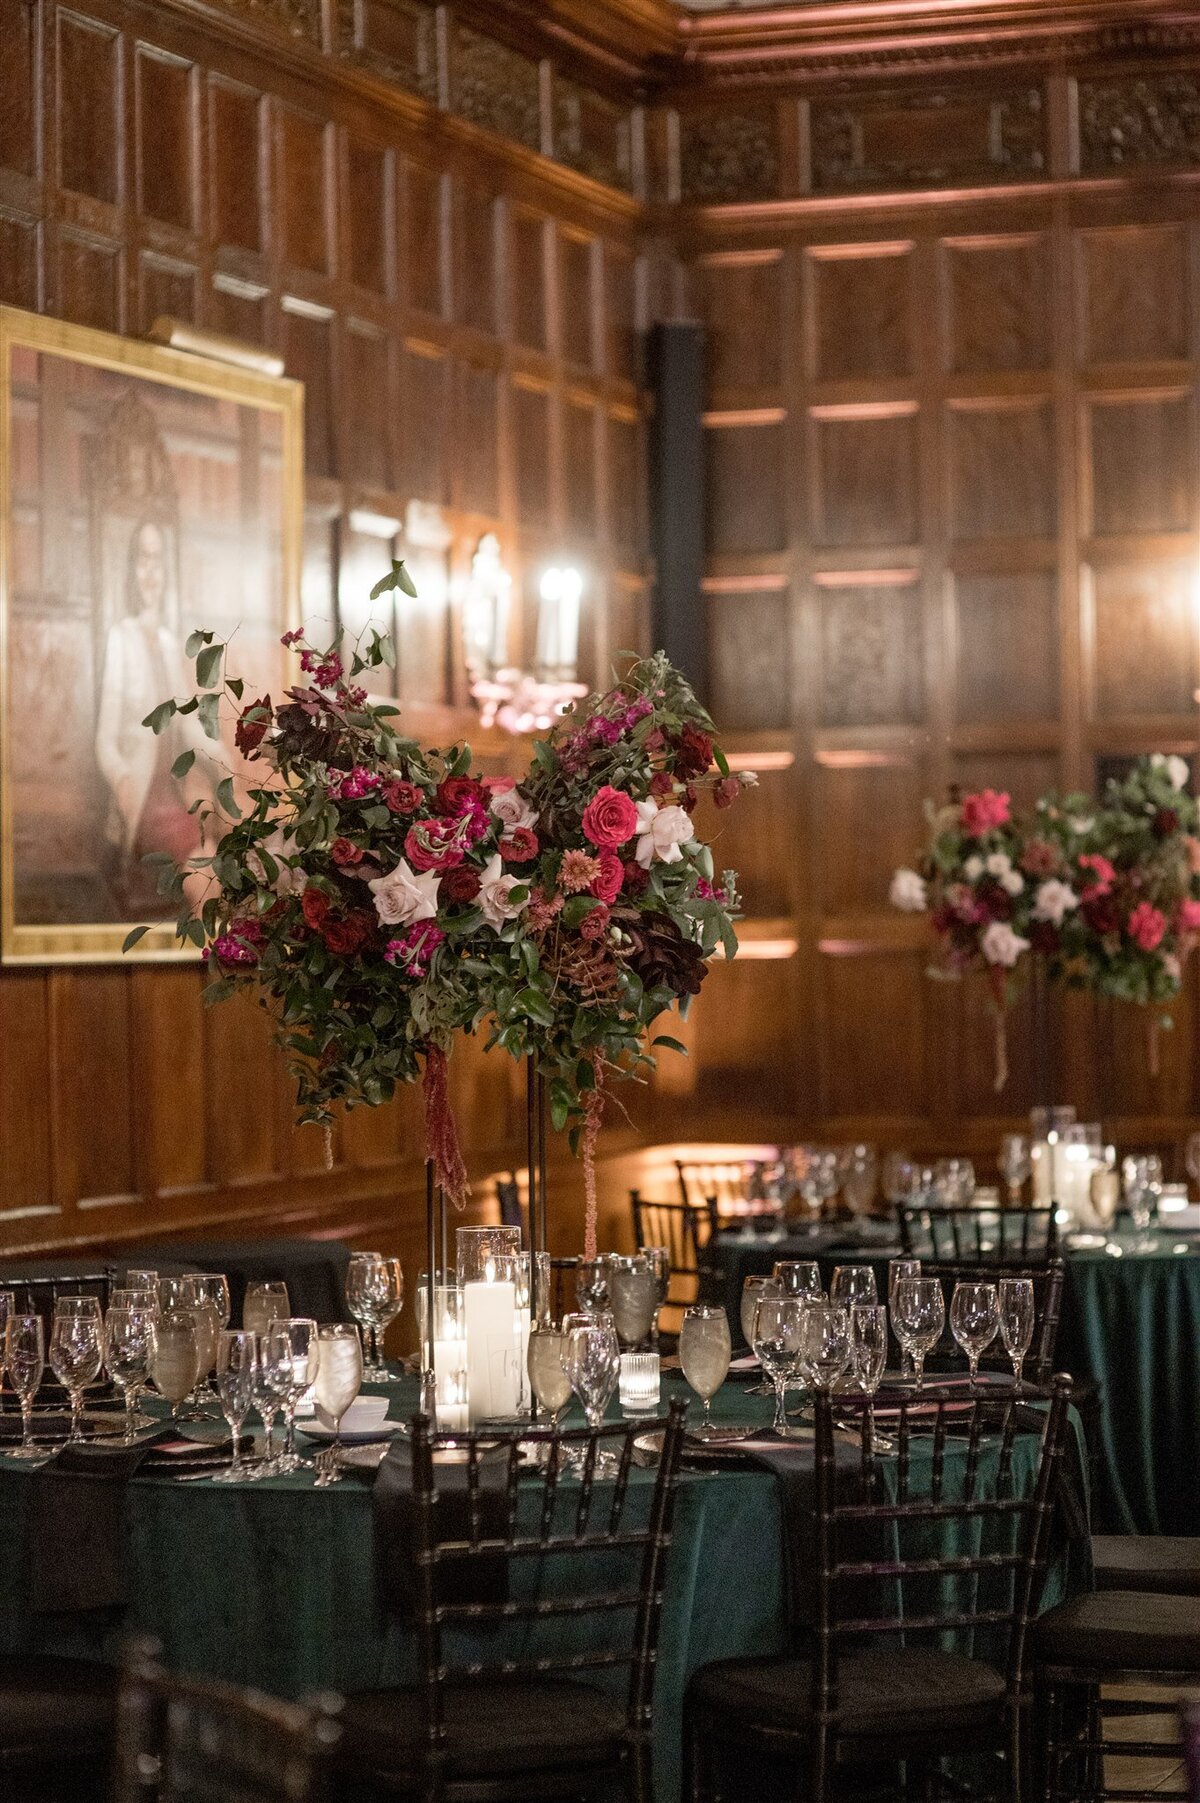 Kate-Murtaugh-Events-Harvard-Club-Boston-reception-table-centerpieces-wedding-planner